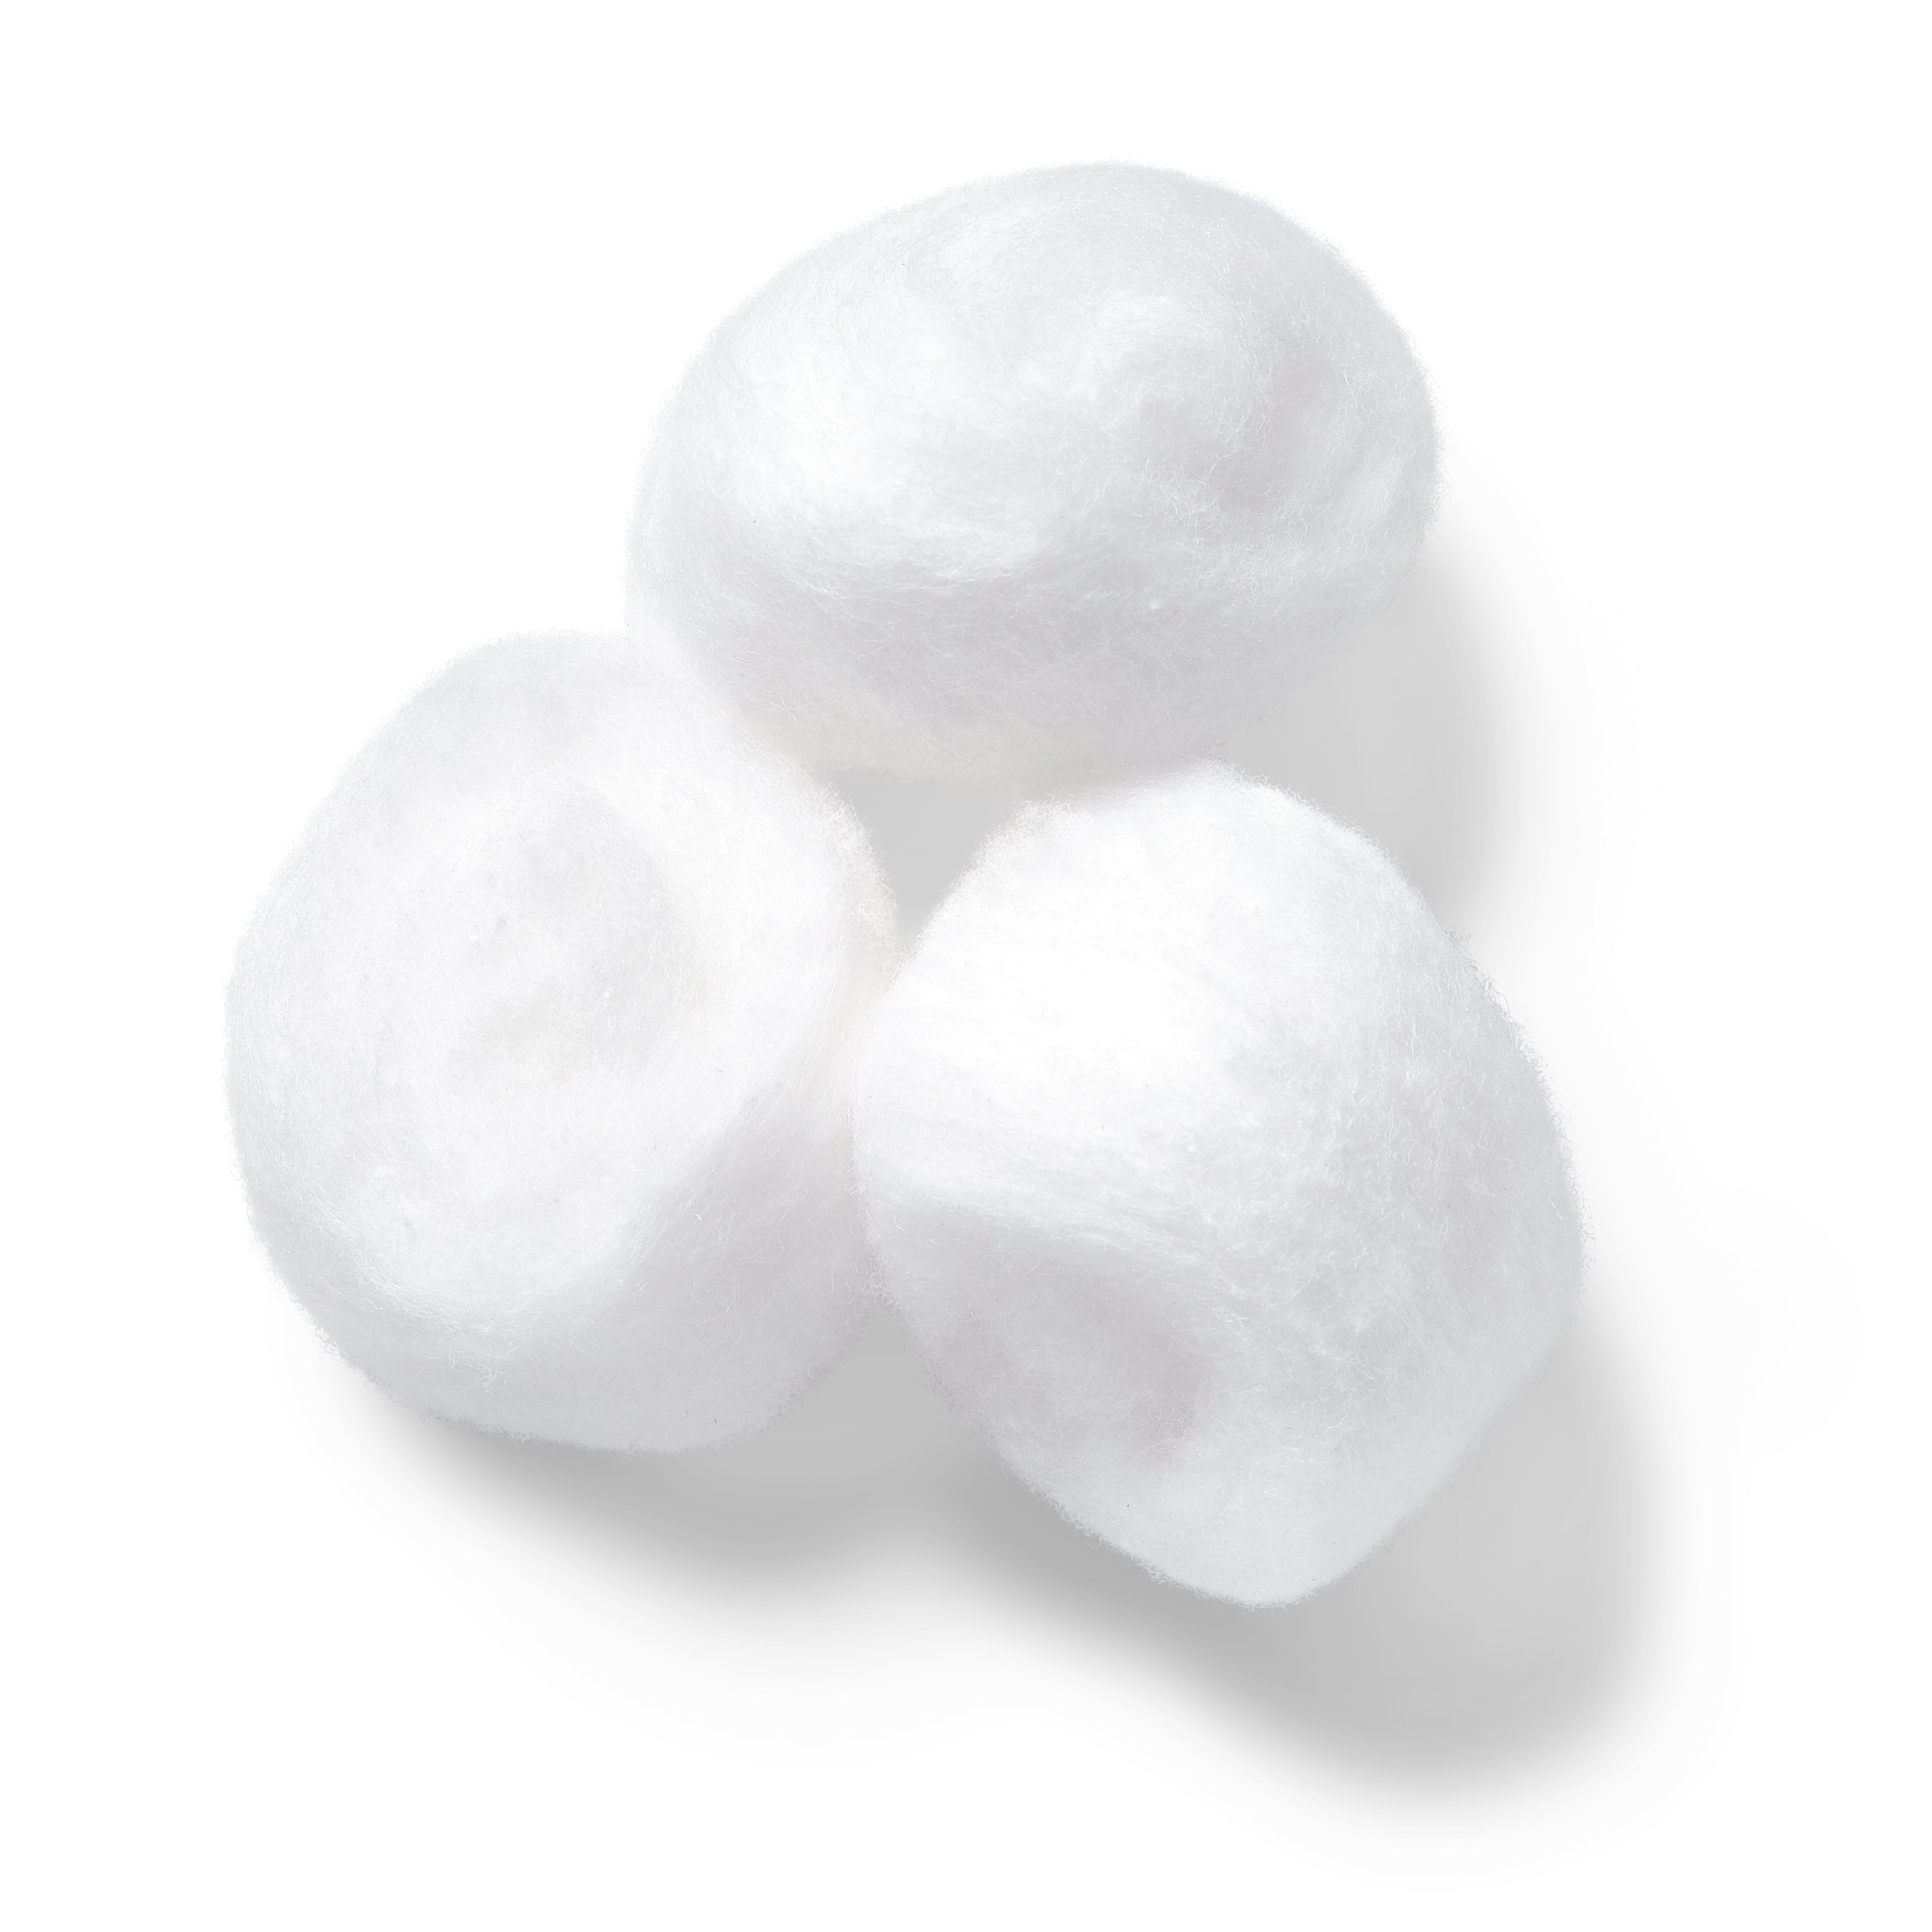 Cotton Couture - Soft White Yardage